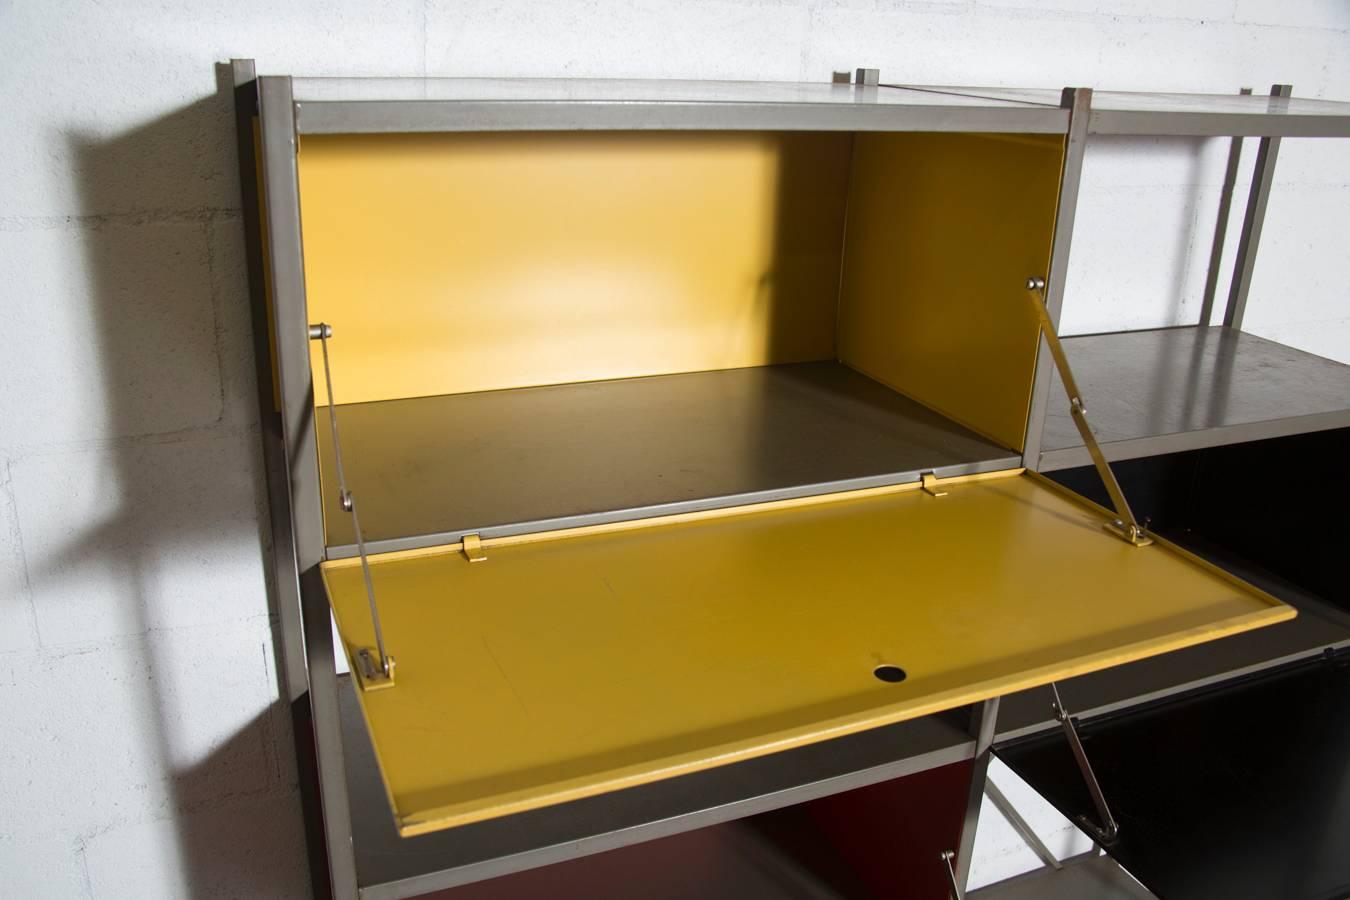 Dutch Wim Rietveld Industrial Metal Cabinet #663-2 for Gispen